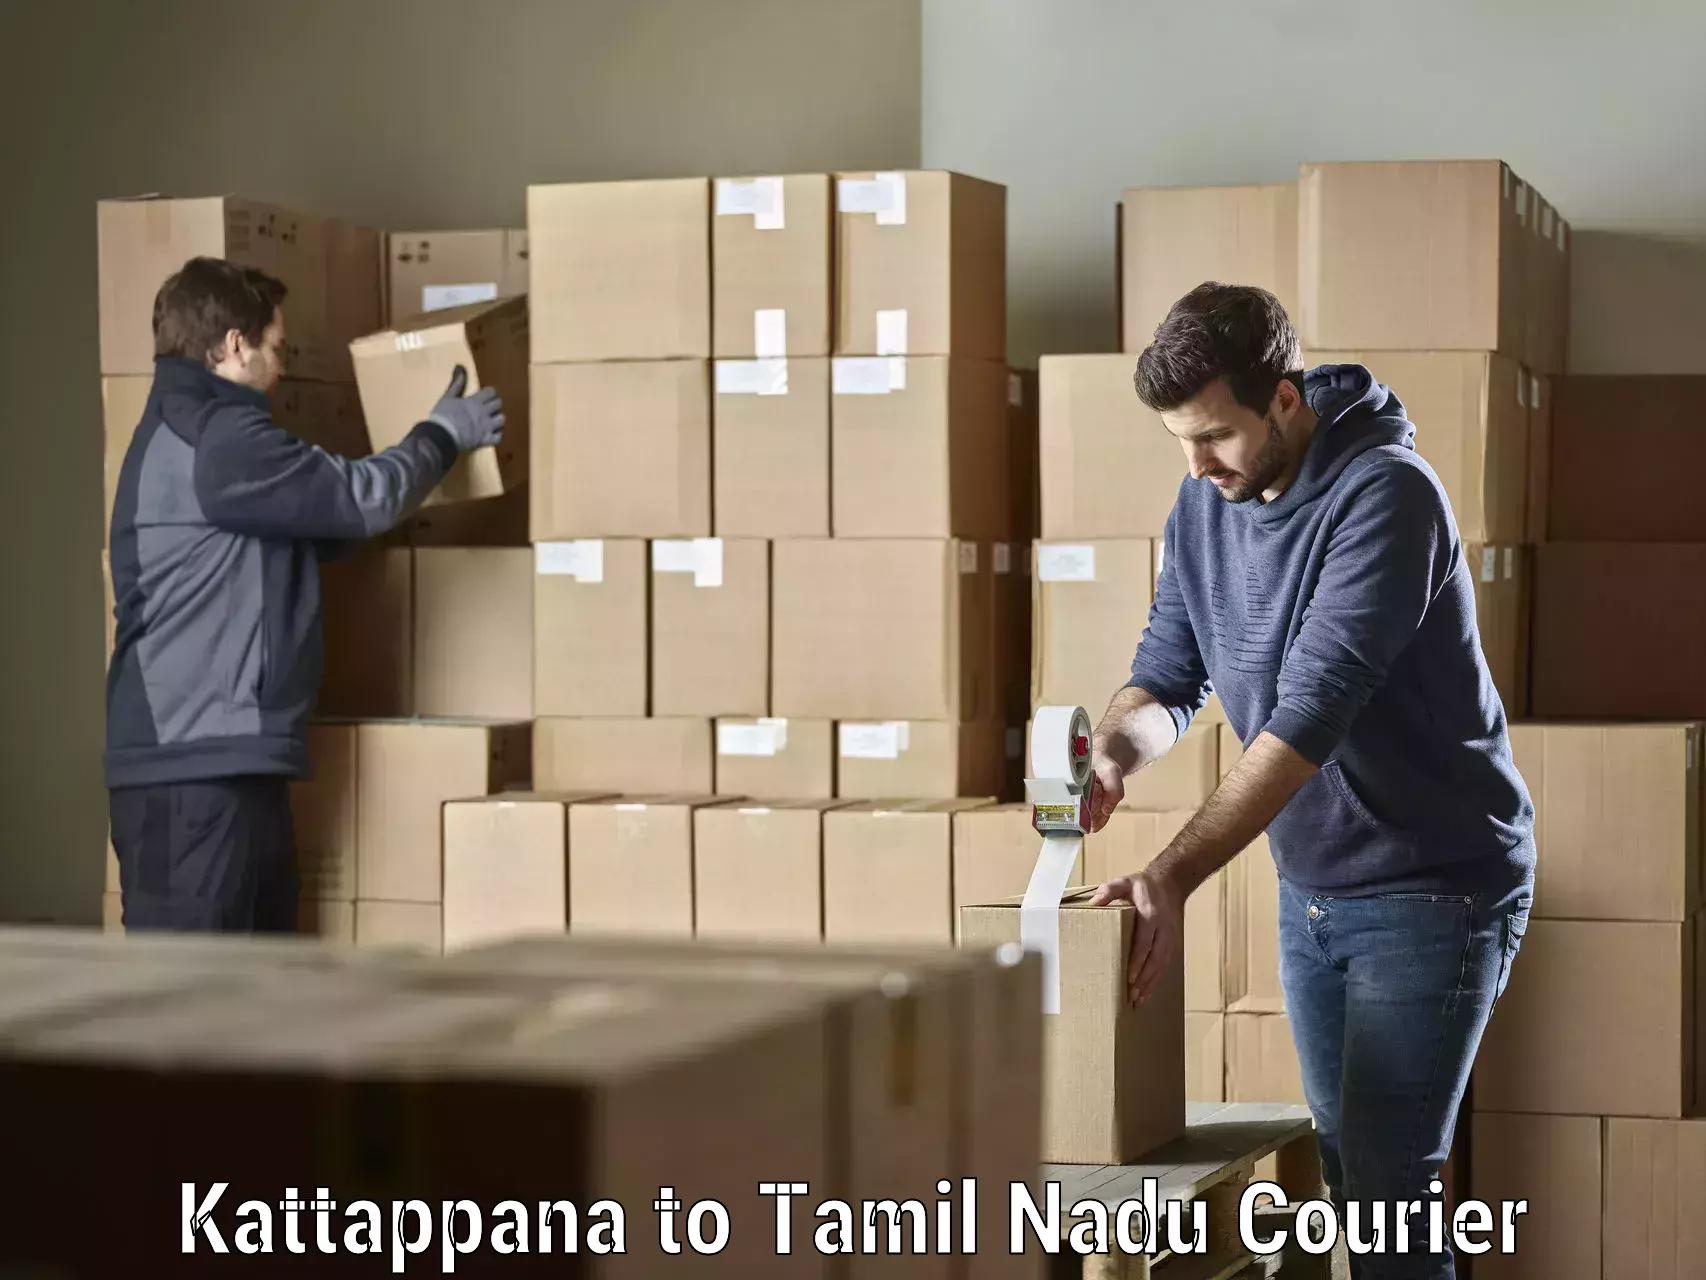 Reliable courier service Kattappana to Chidambaram